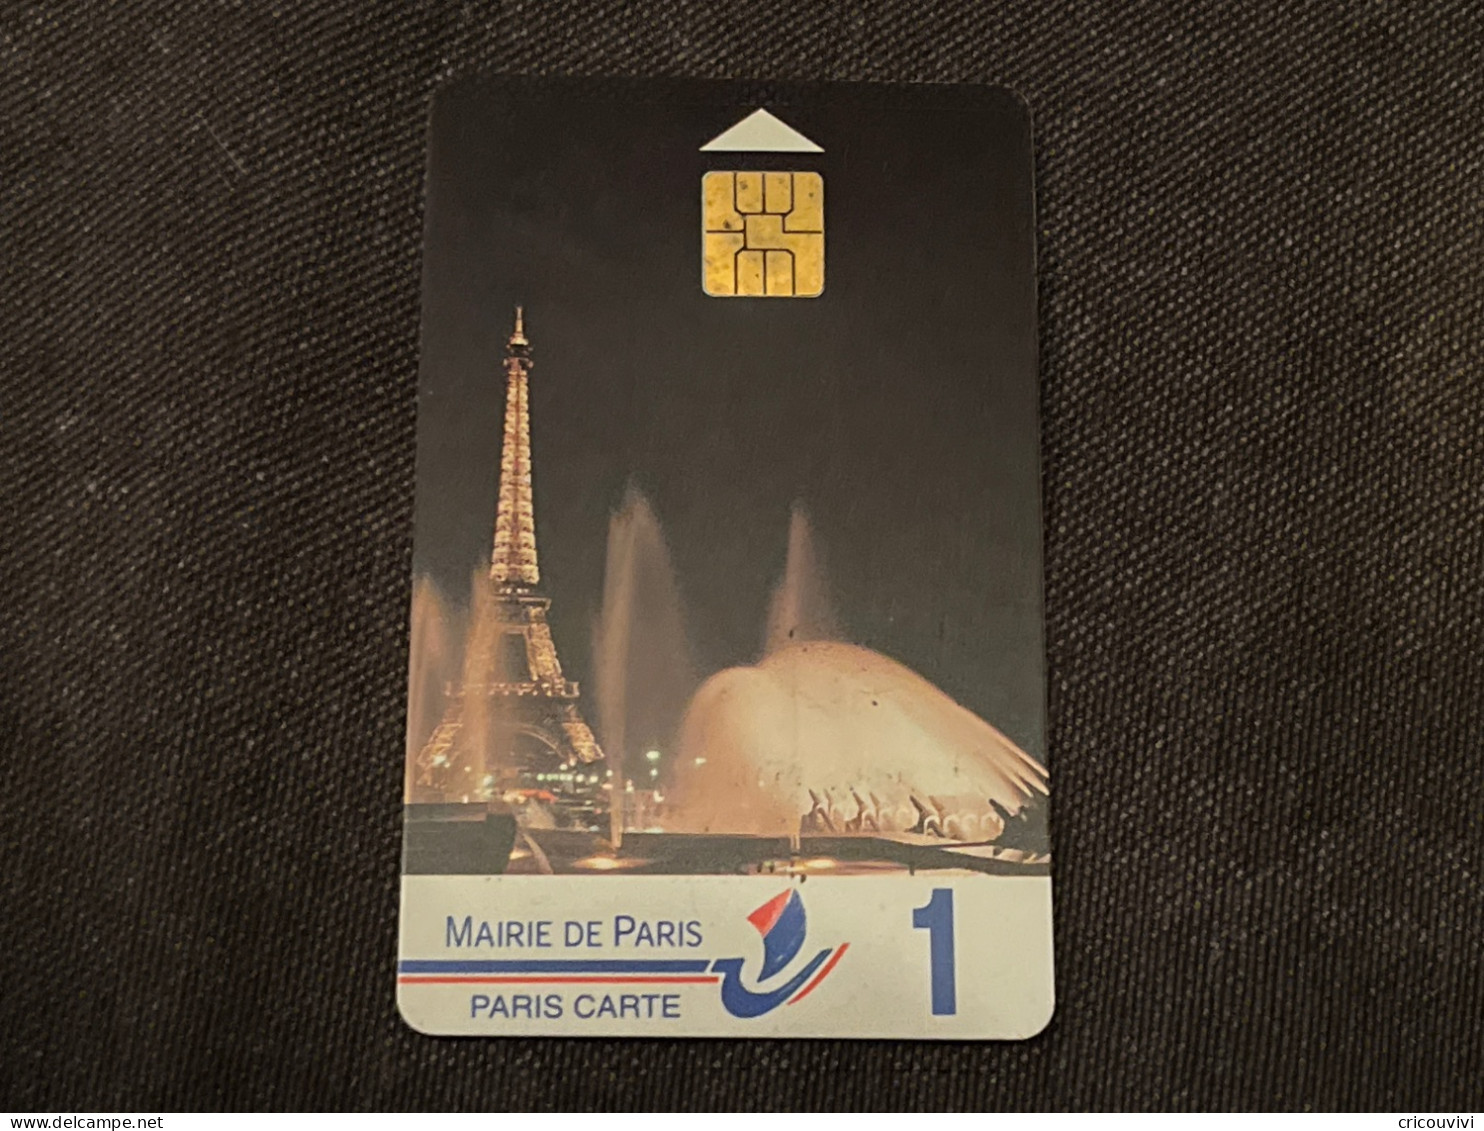 Paris Carte 11 - Parkkarten